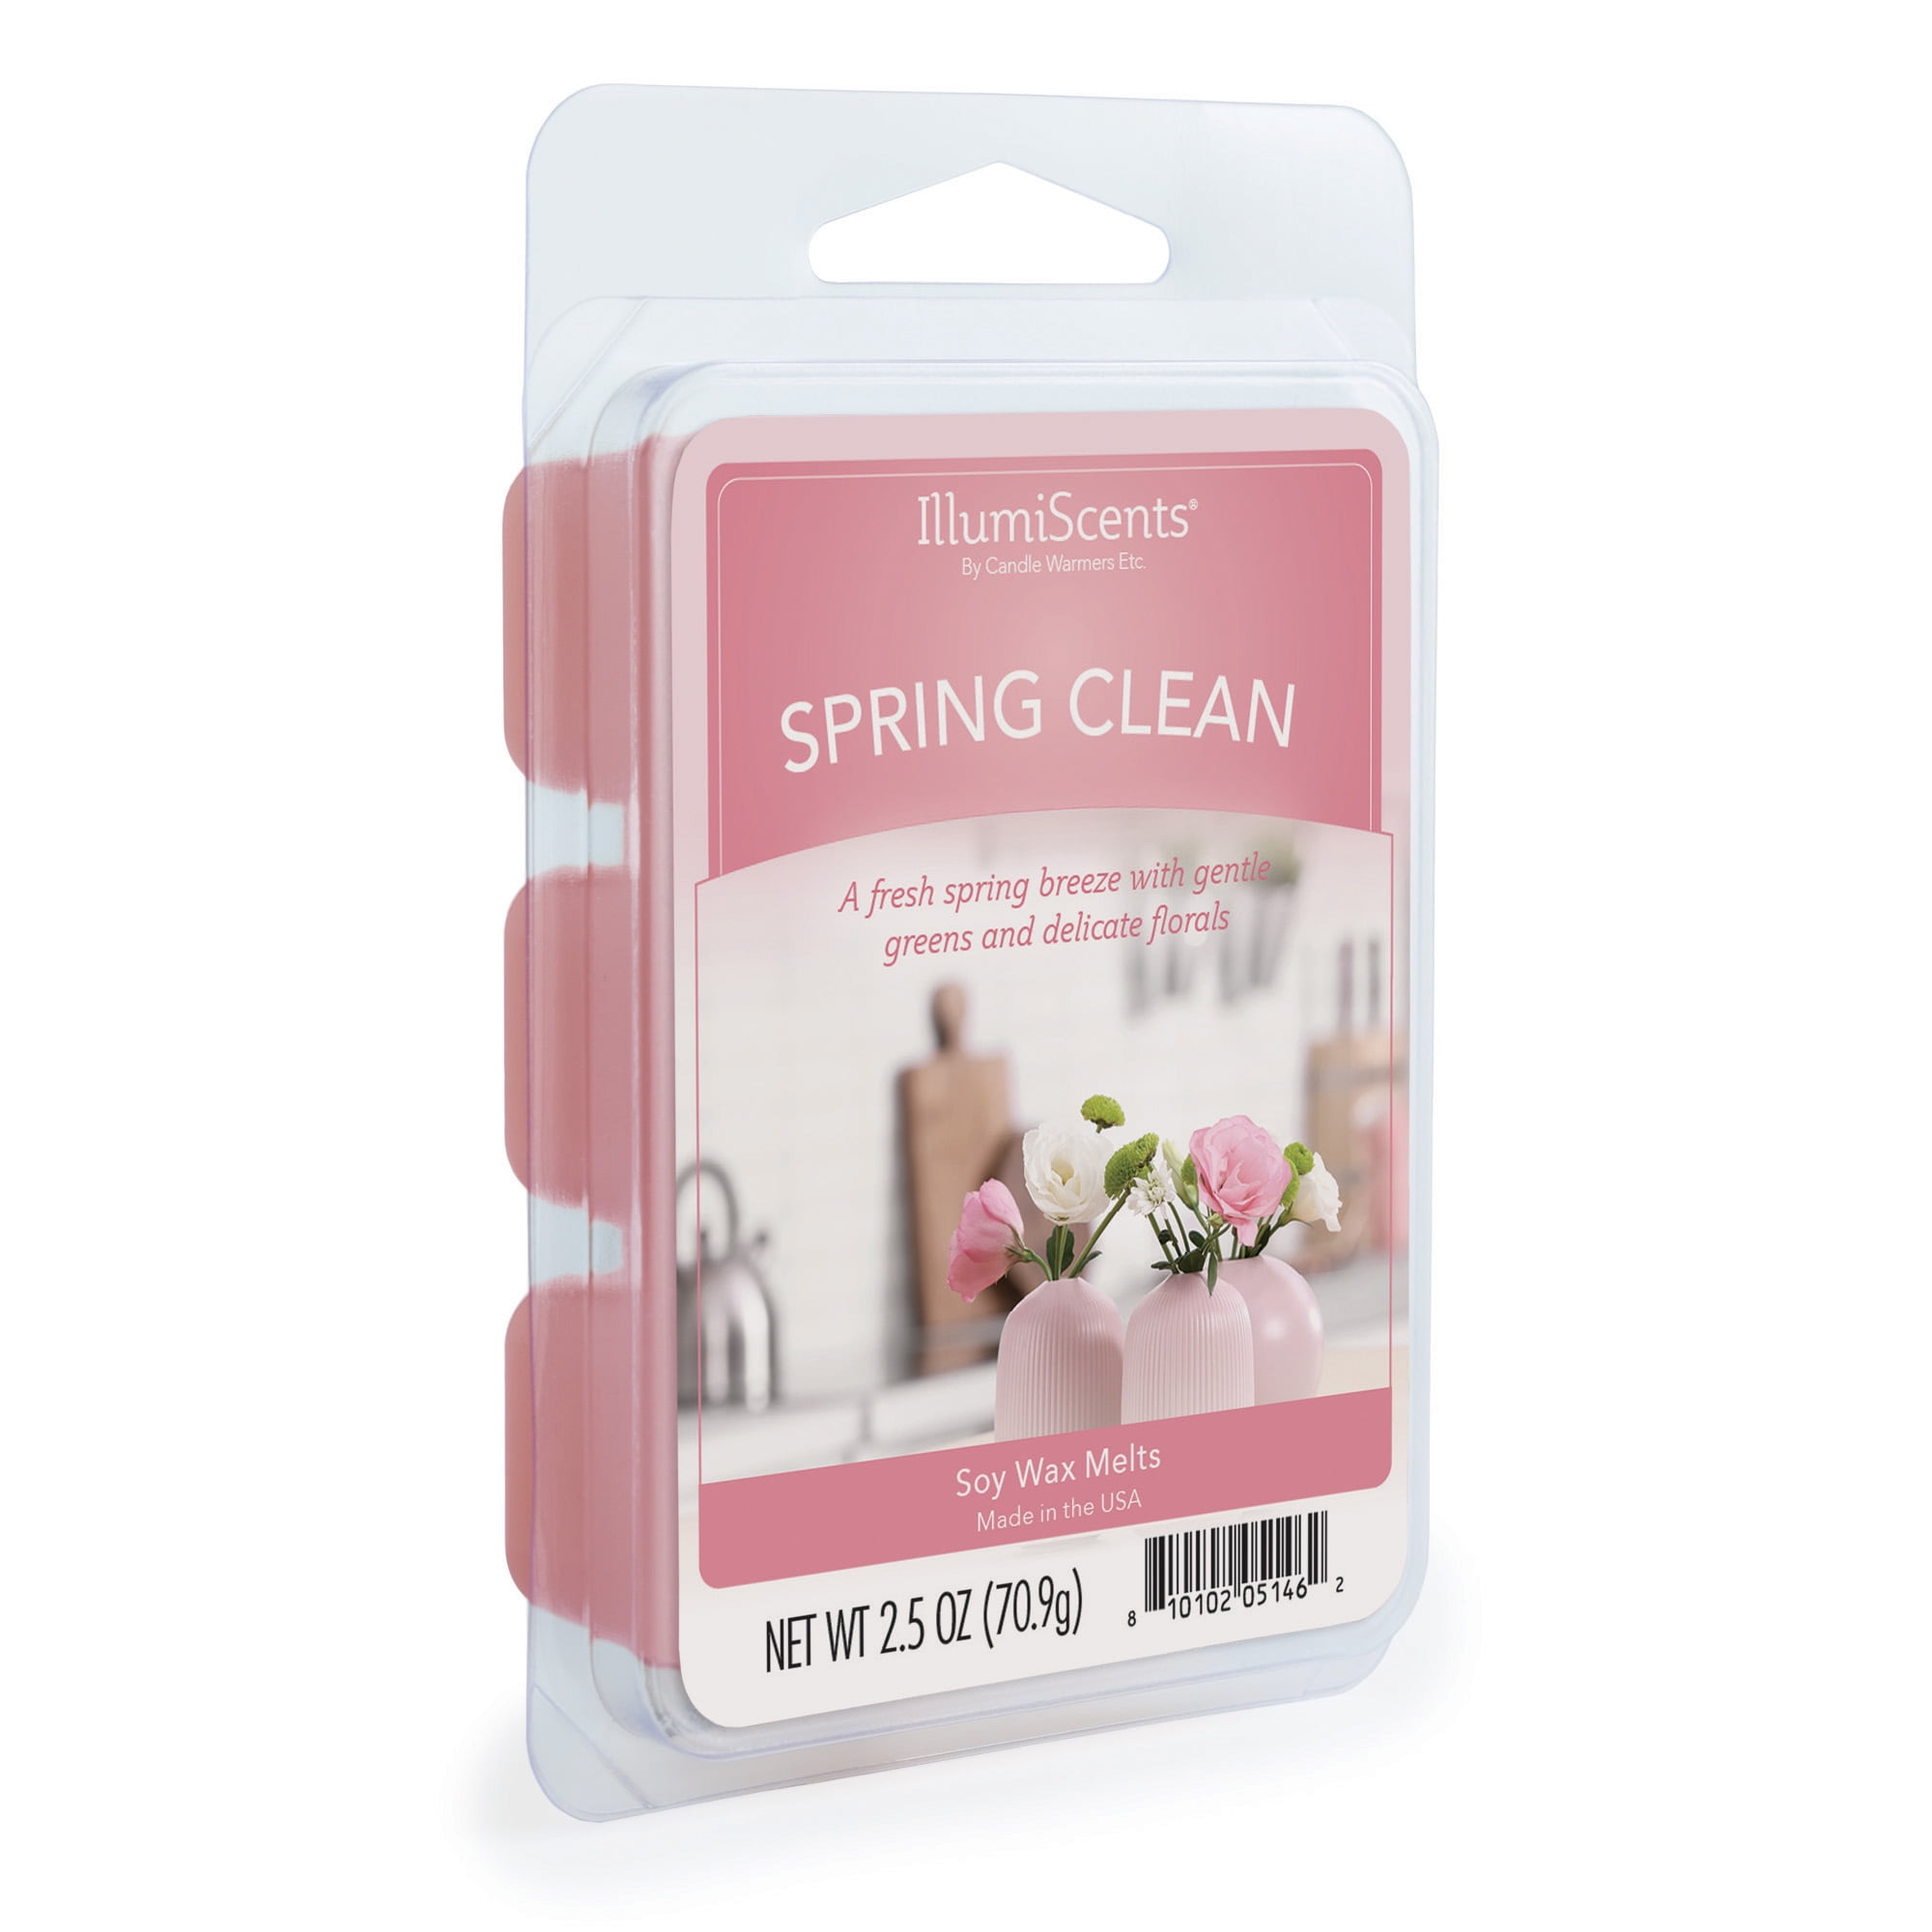 IllumiScents Spring Clean 2.5oz Wax Melt 